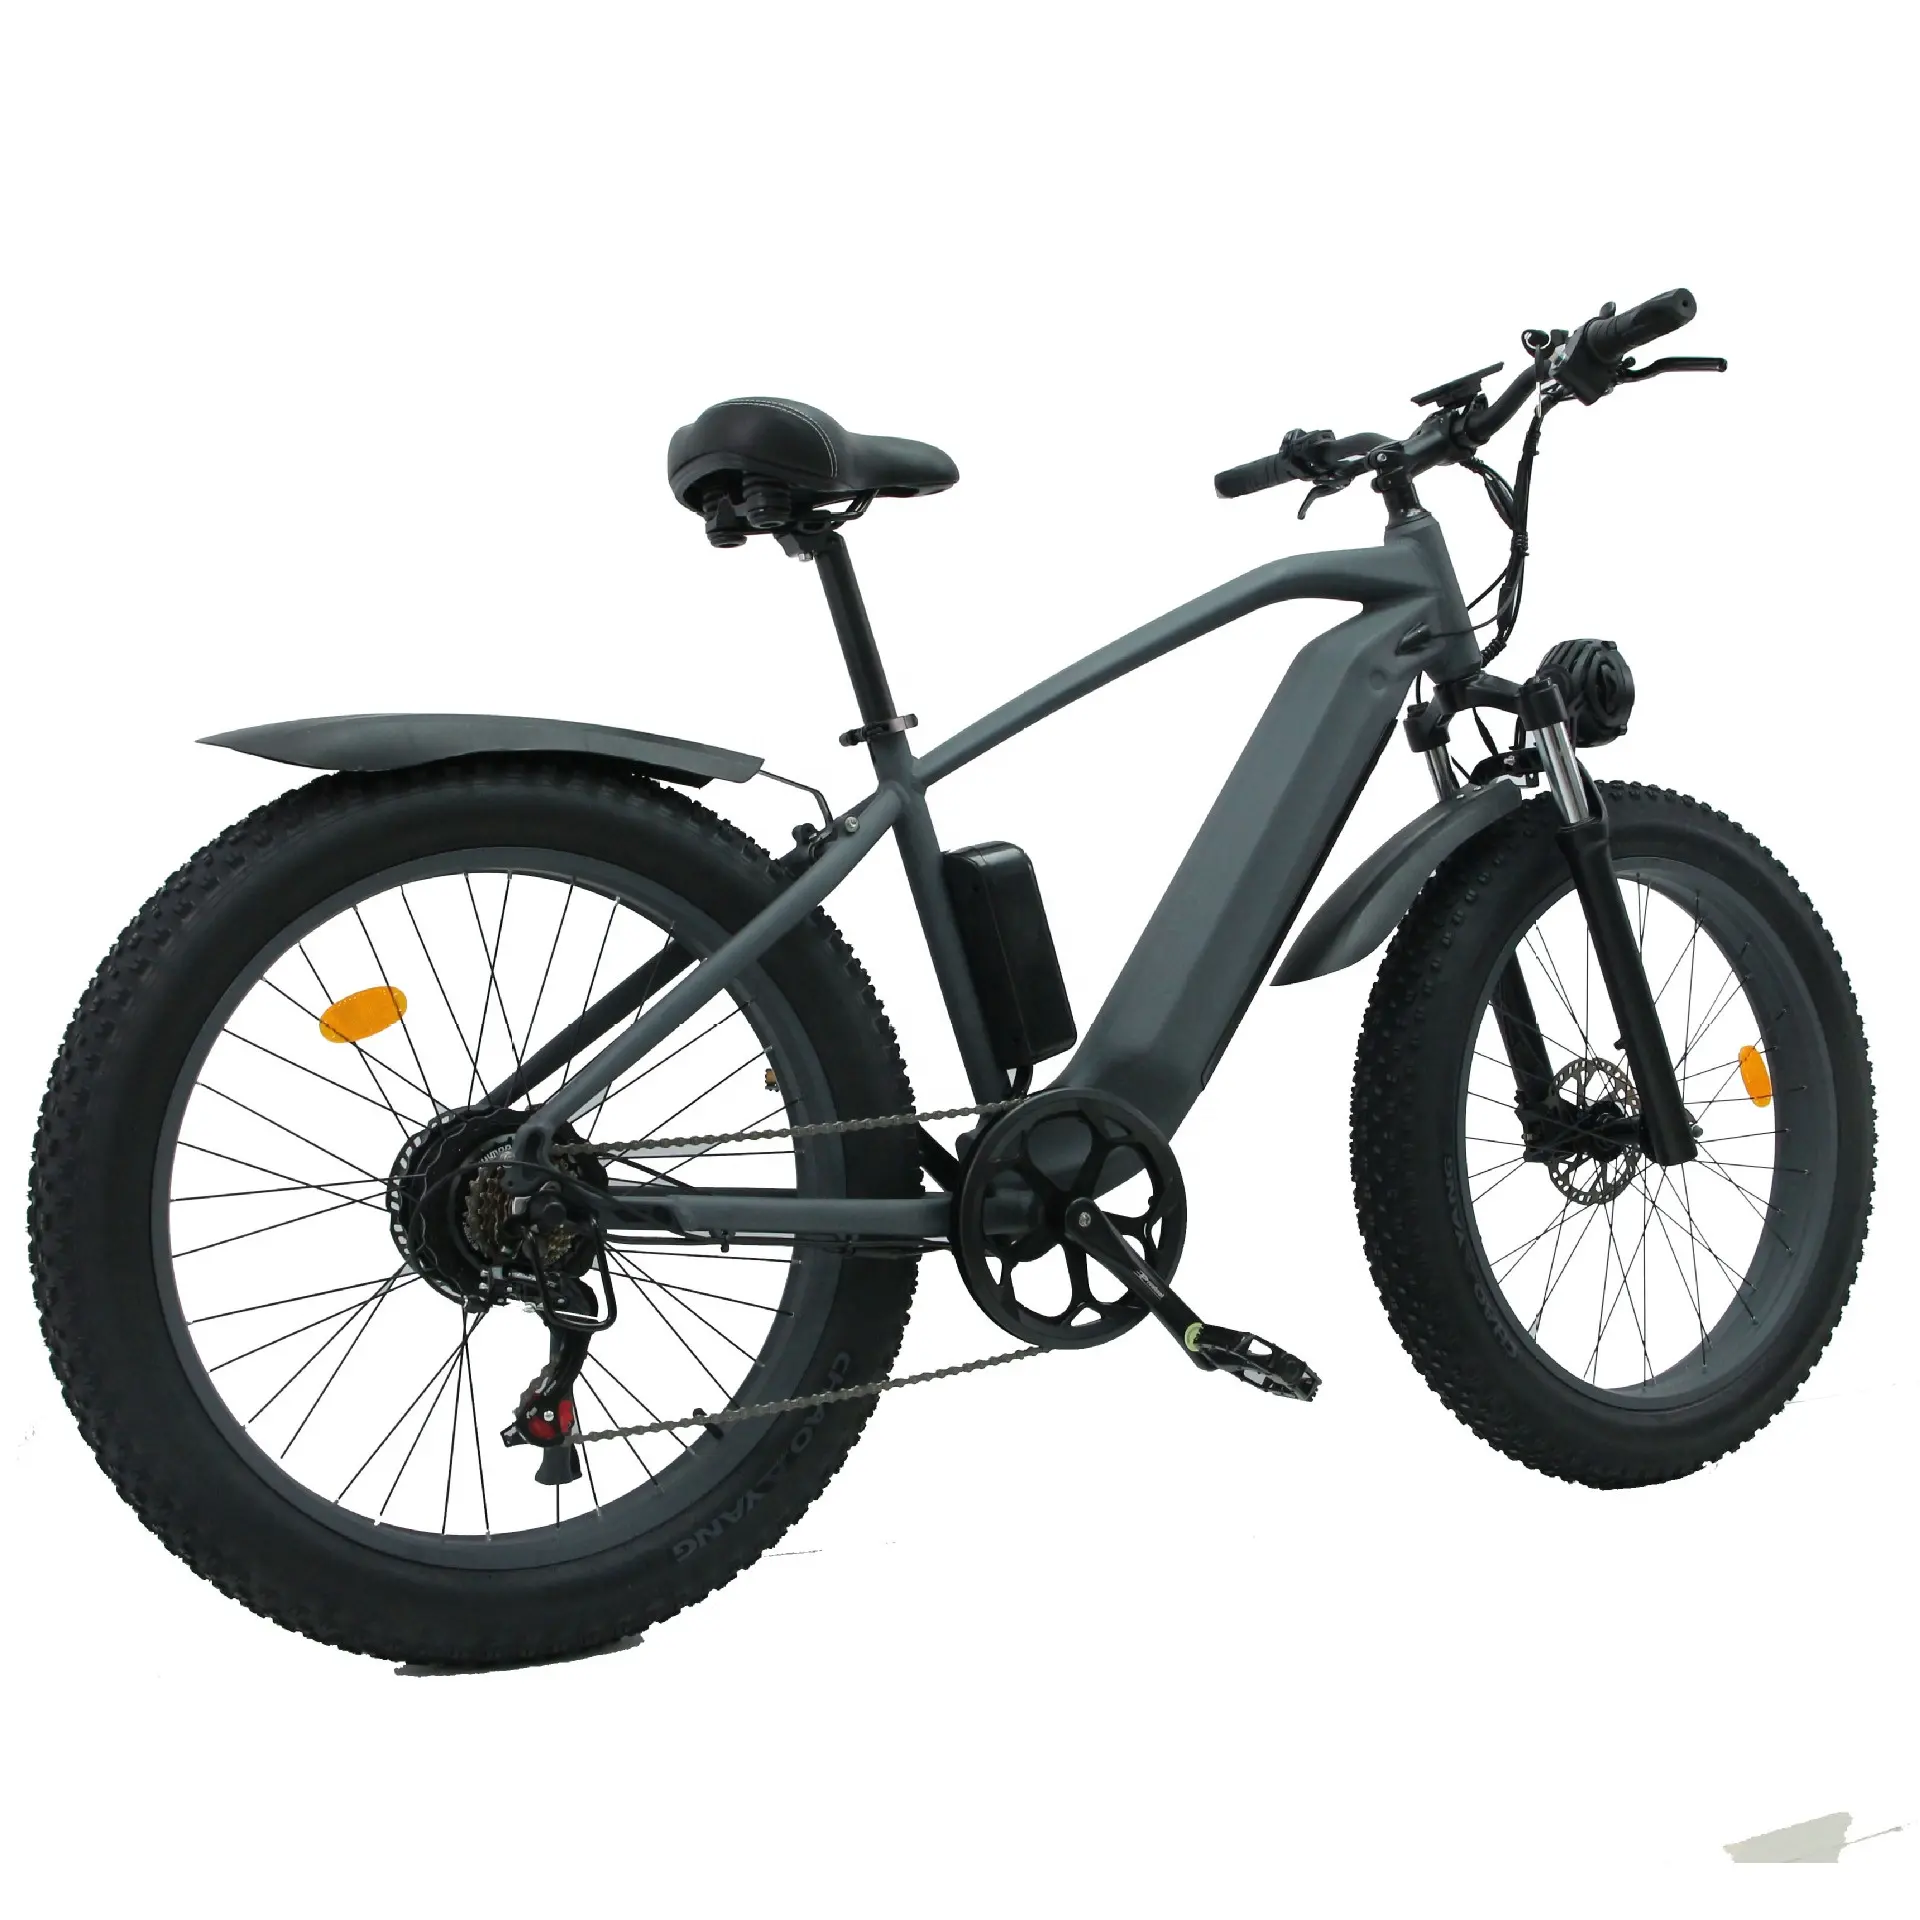 Bicicleta eléctrica de calidad con pantalla LCD, bicicleta de montaña eléctrica, bicicleta de carretera eléctrica para adultos